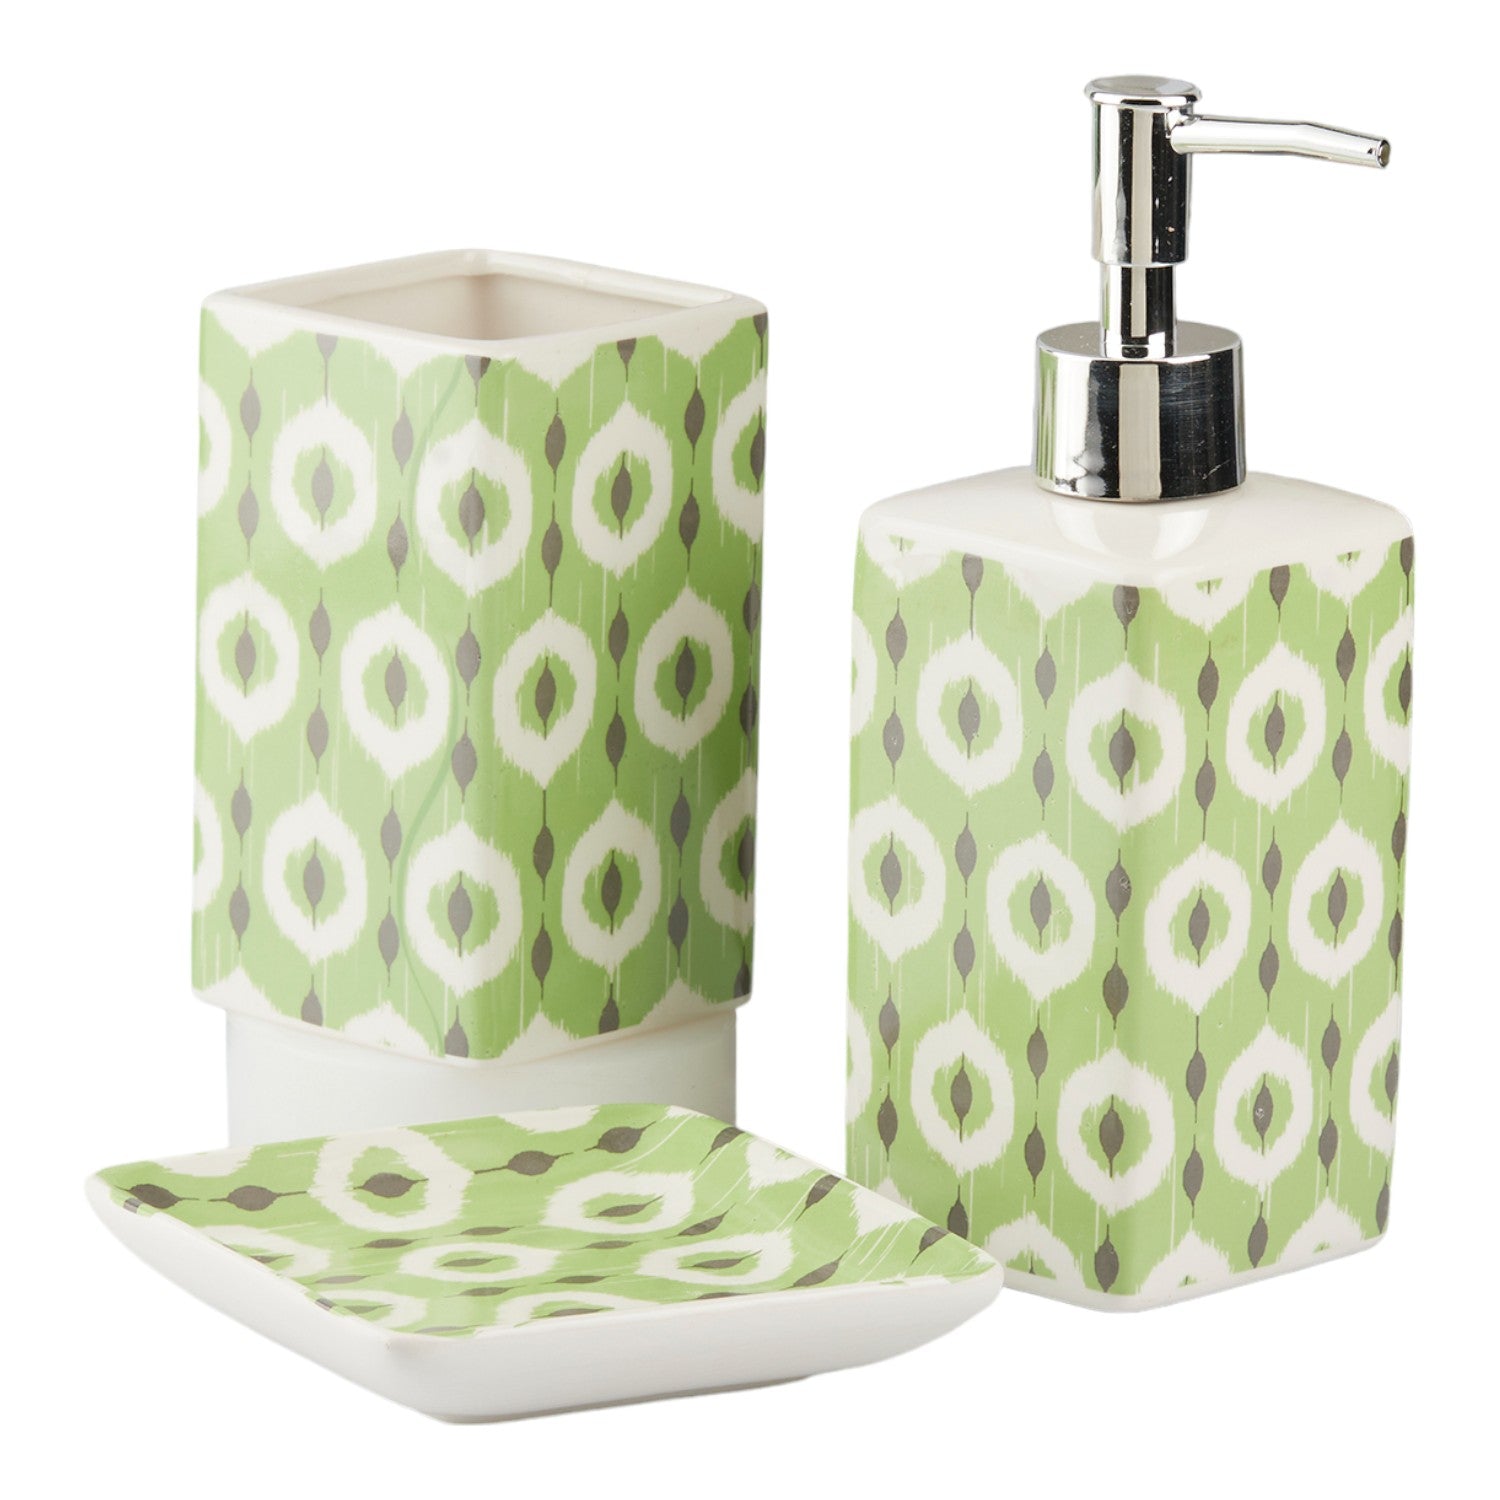 Ceramic Bathroom Set of 3 with Soap Dispenser (10421)